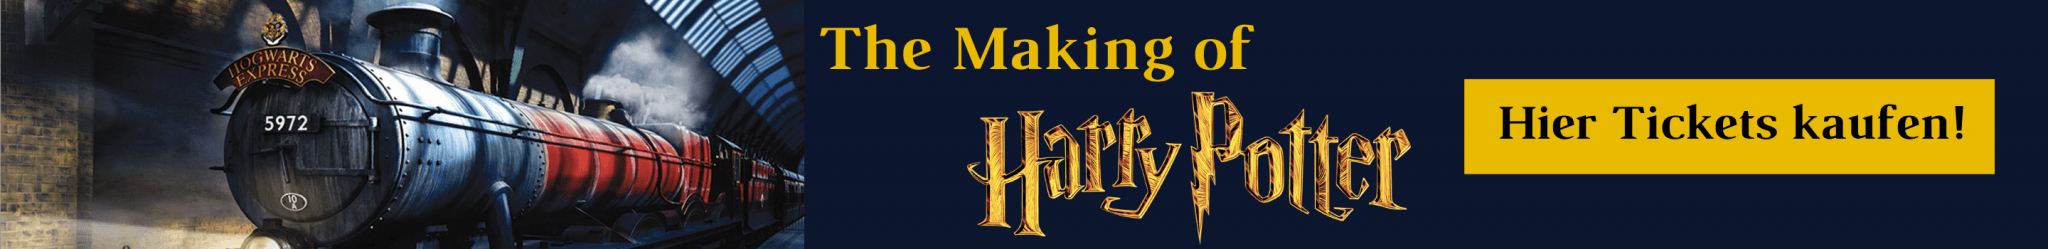 Harry Potter Studio Tour Tickets Banner